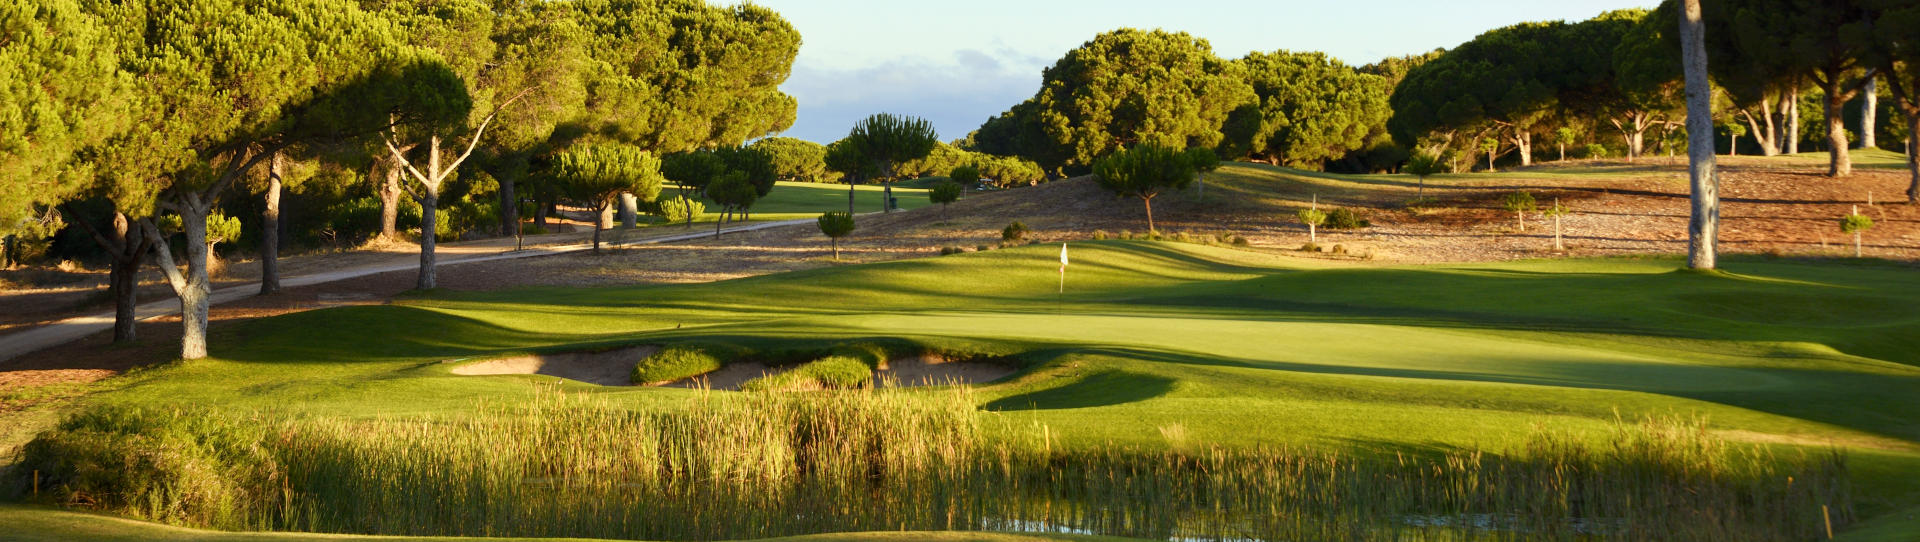 Portugal golf courses - Vilamoura Dom Pedro Pinhal - Photo 2